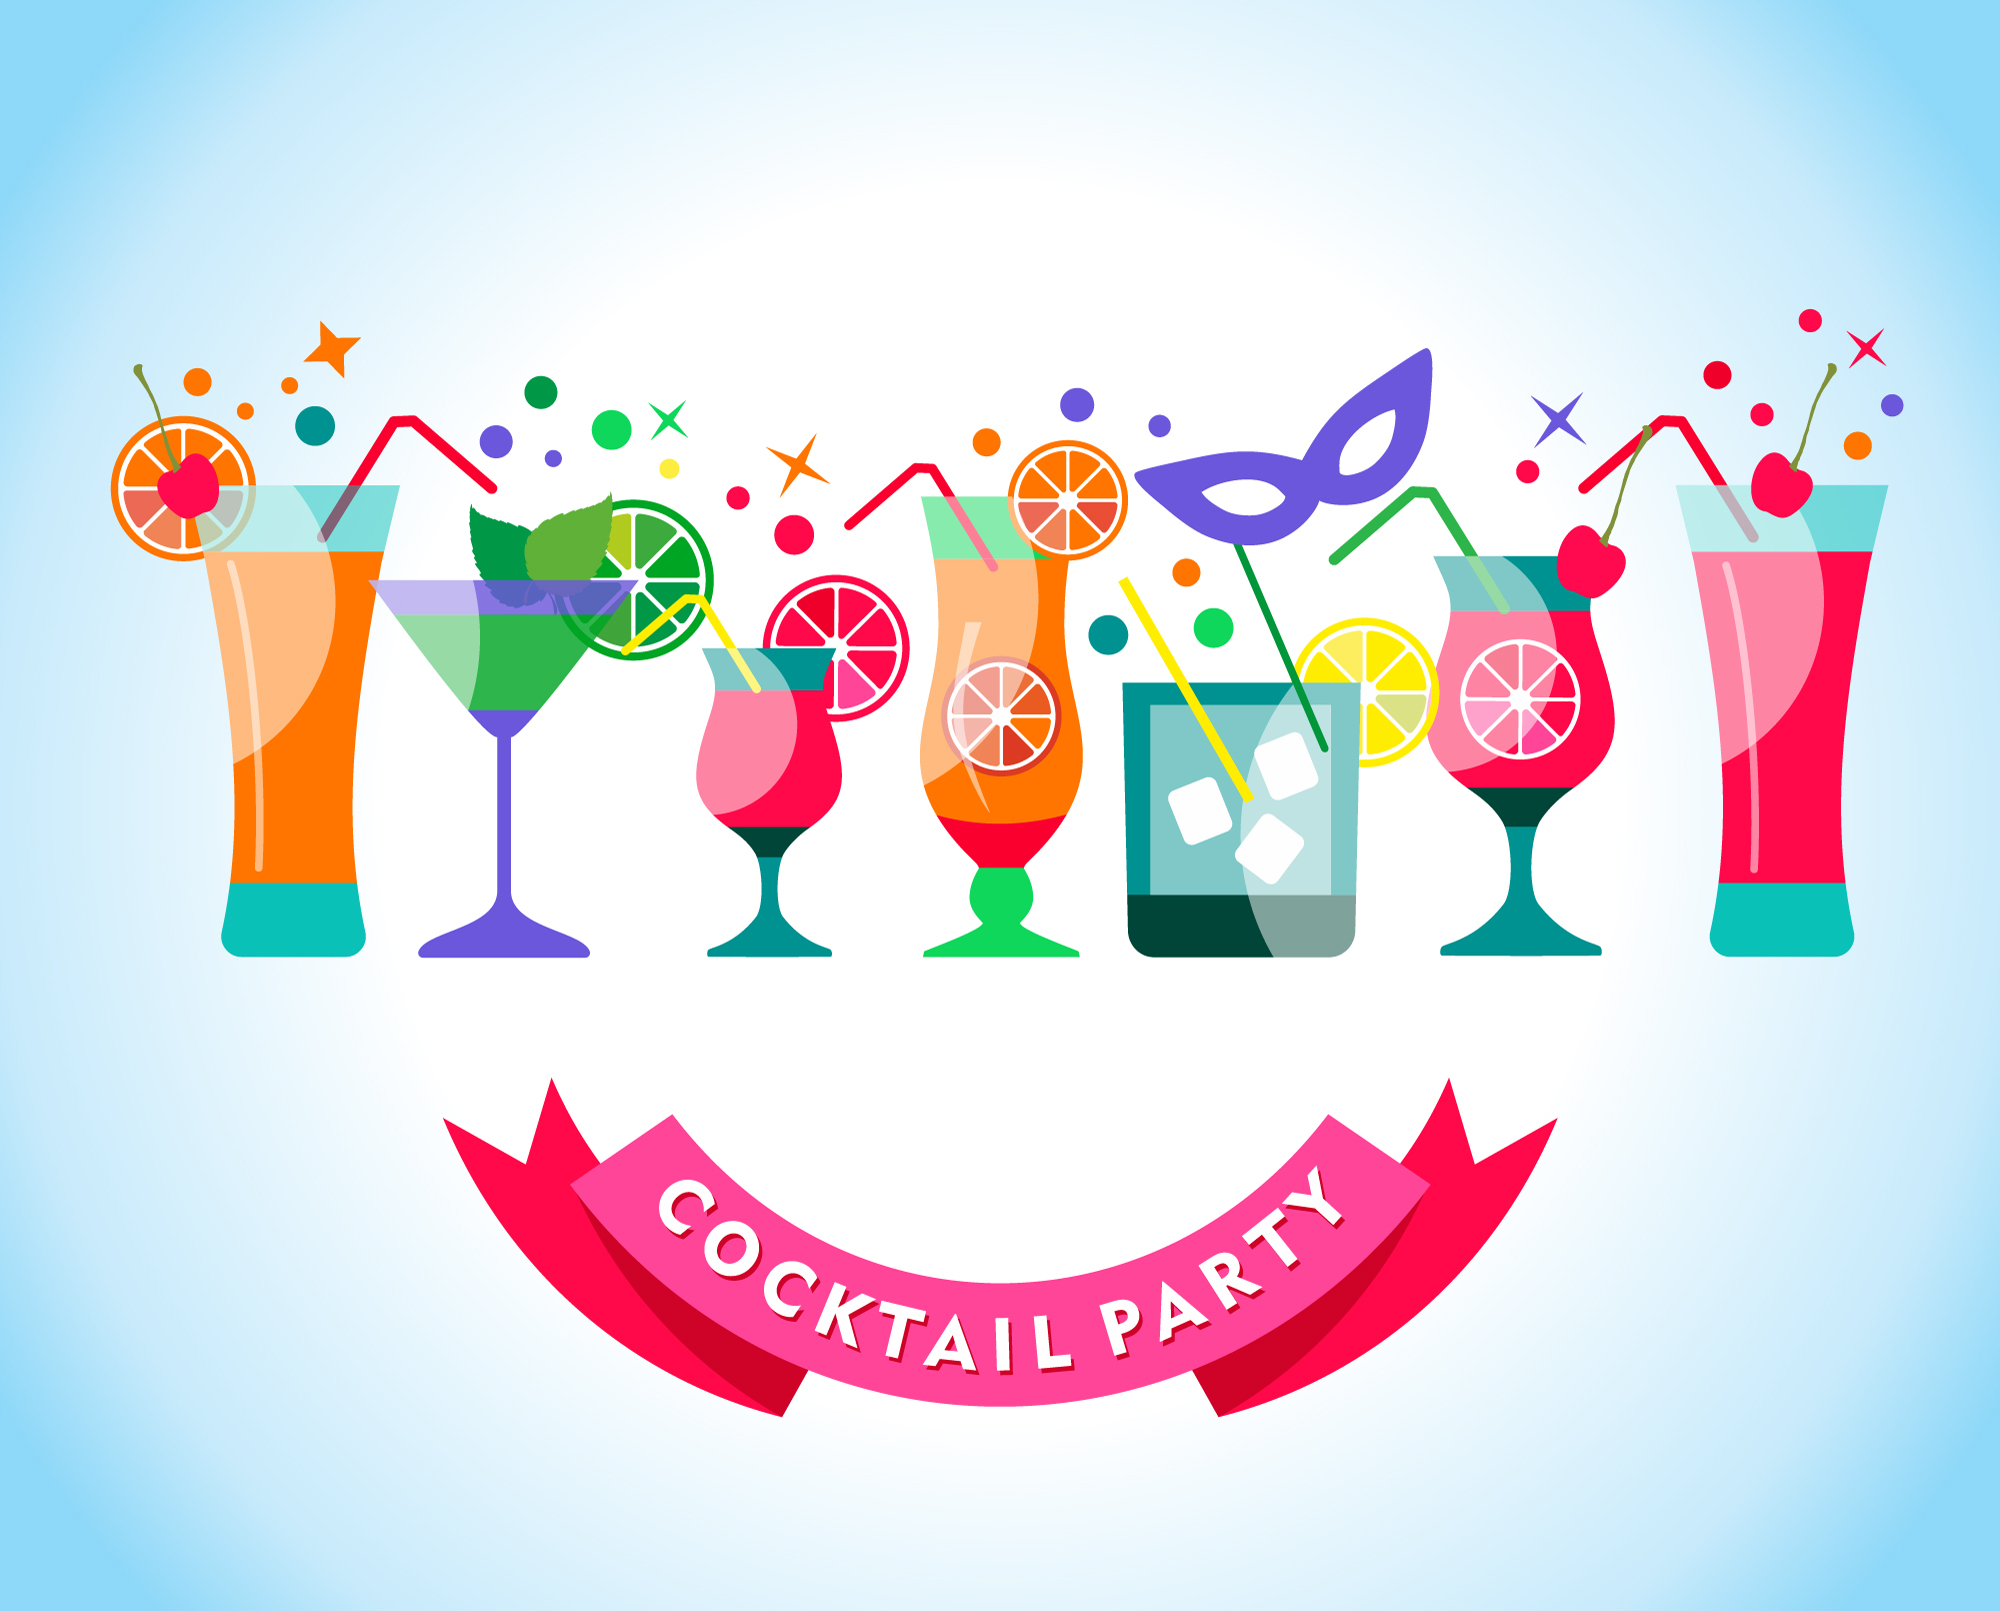 Cocktail party illustration Photoshop brush